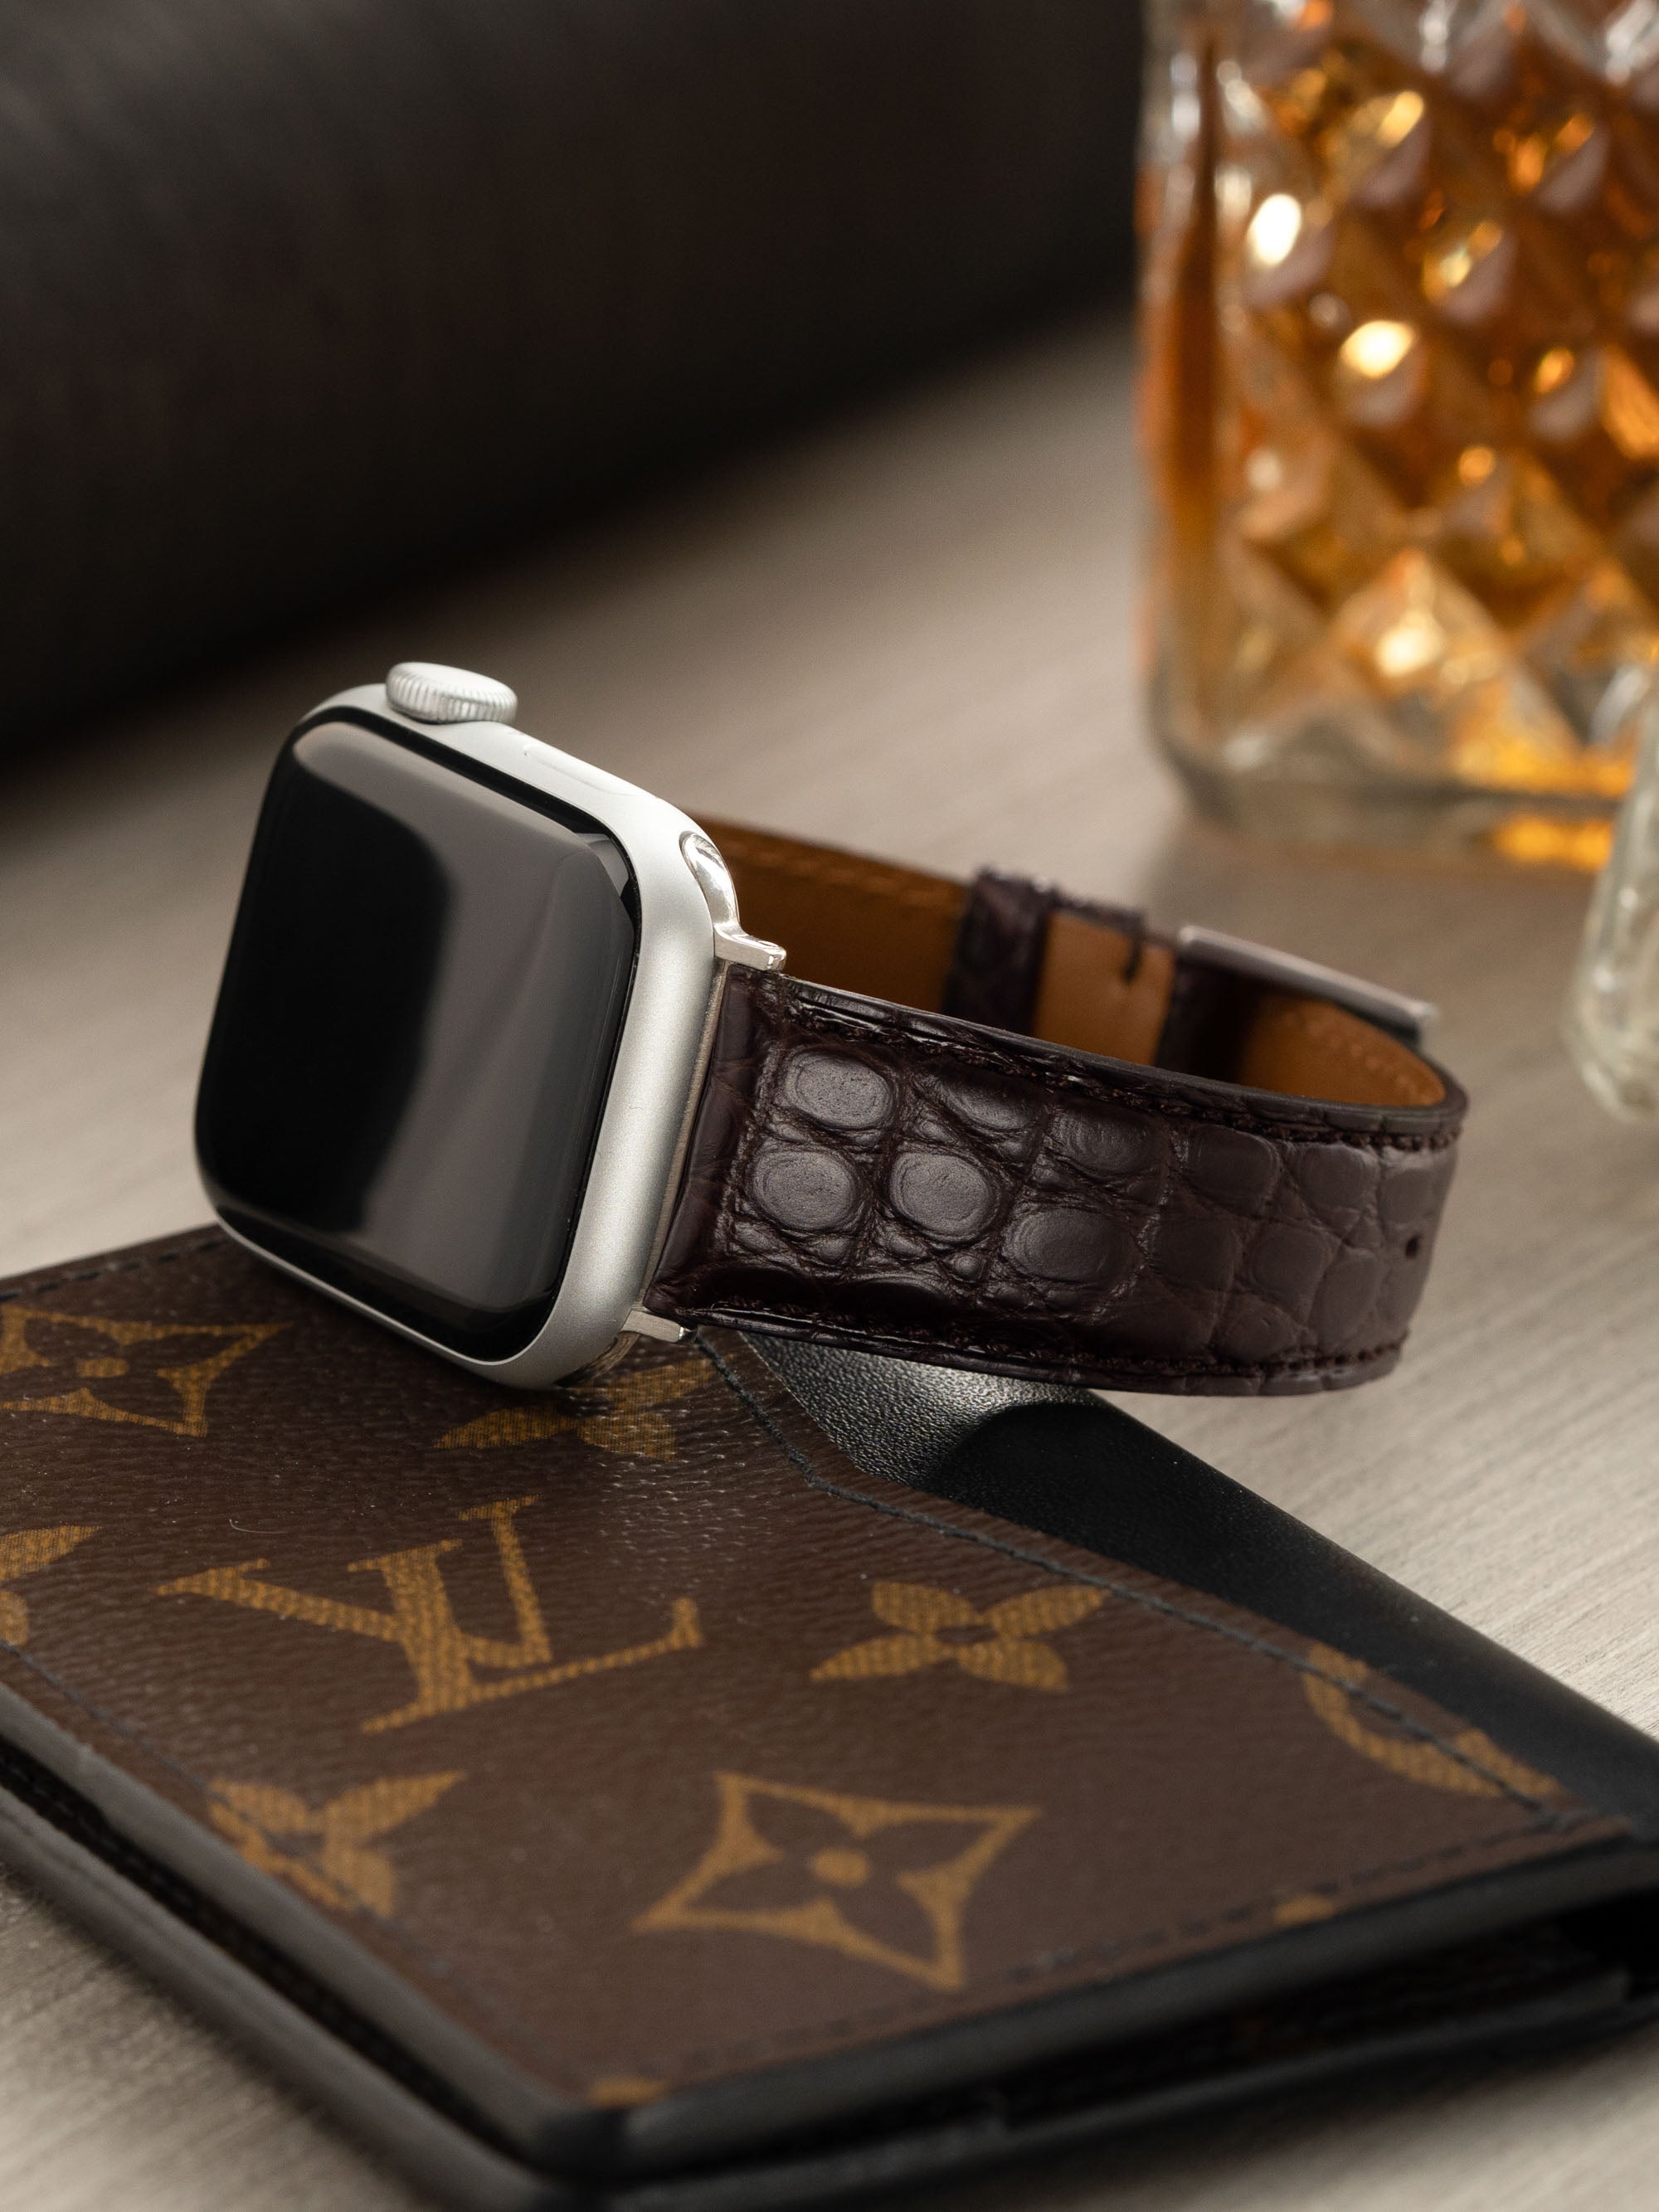 Mocha - Elastic Apple Watch Bands by 308designs - CCCVIII